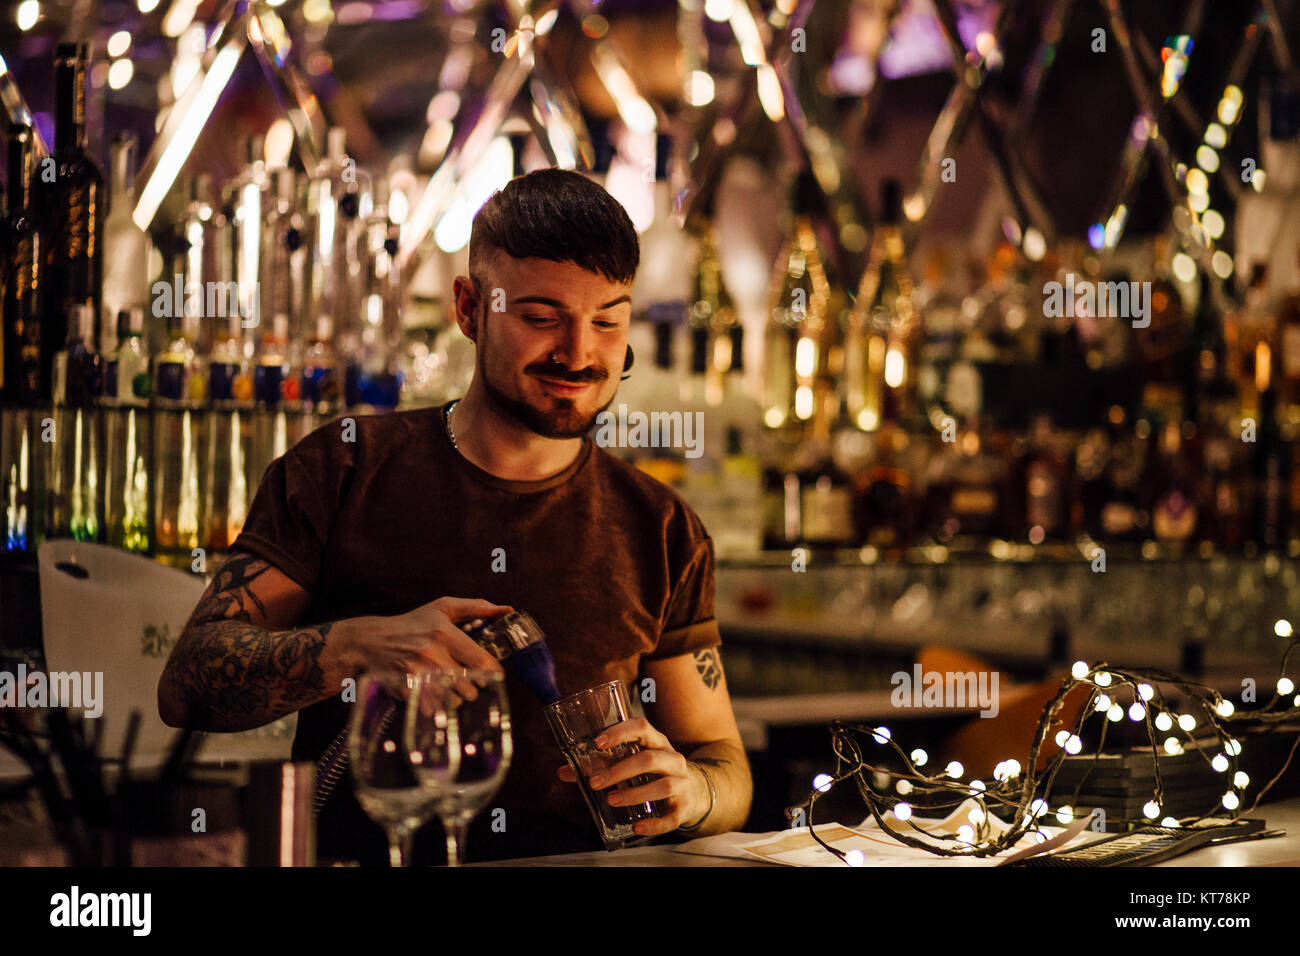 Bartender At Work Stock Photo